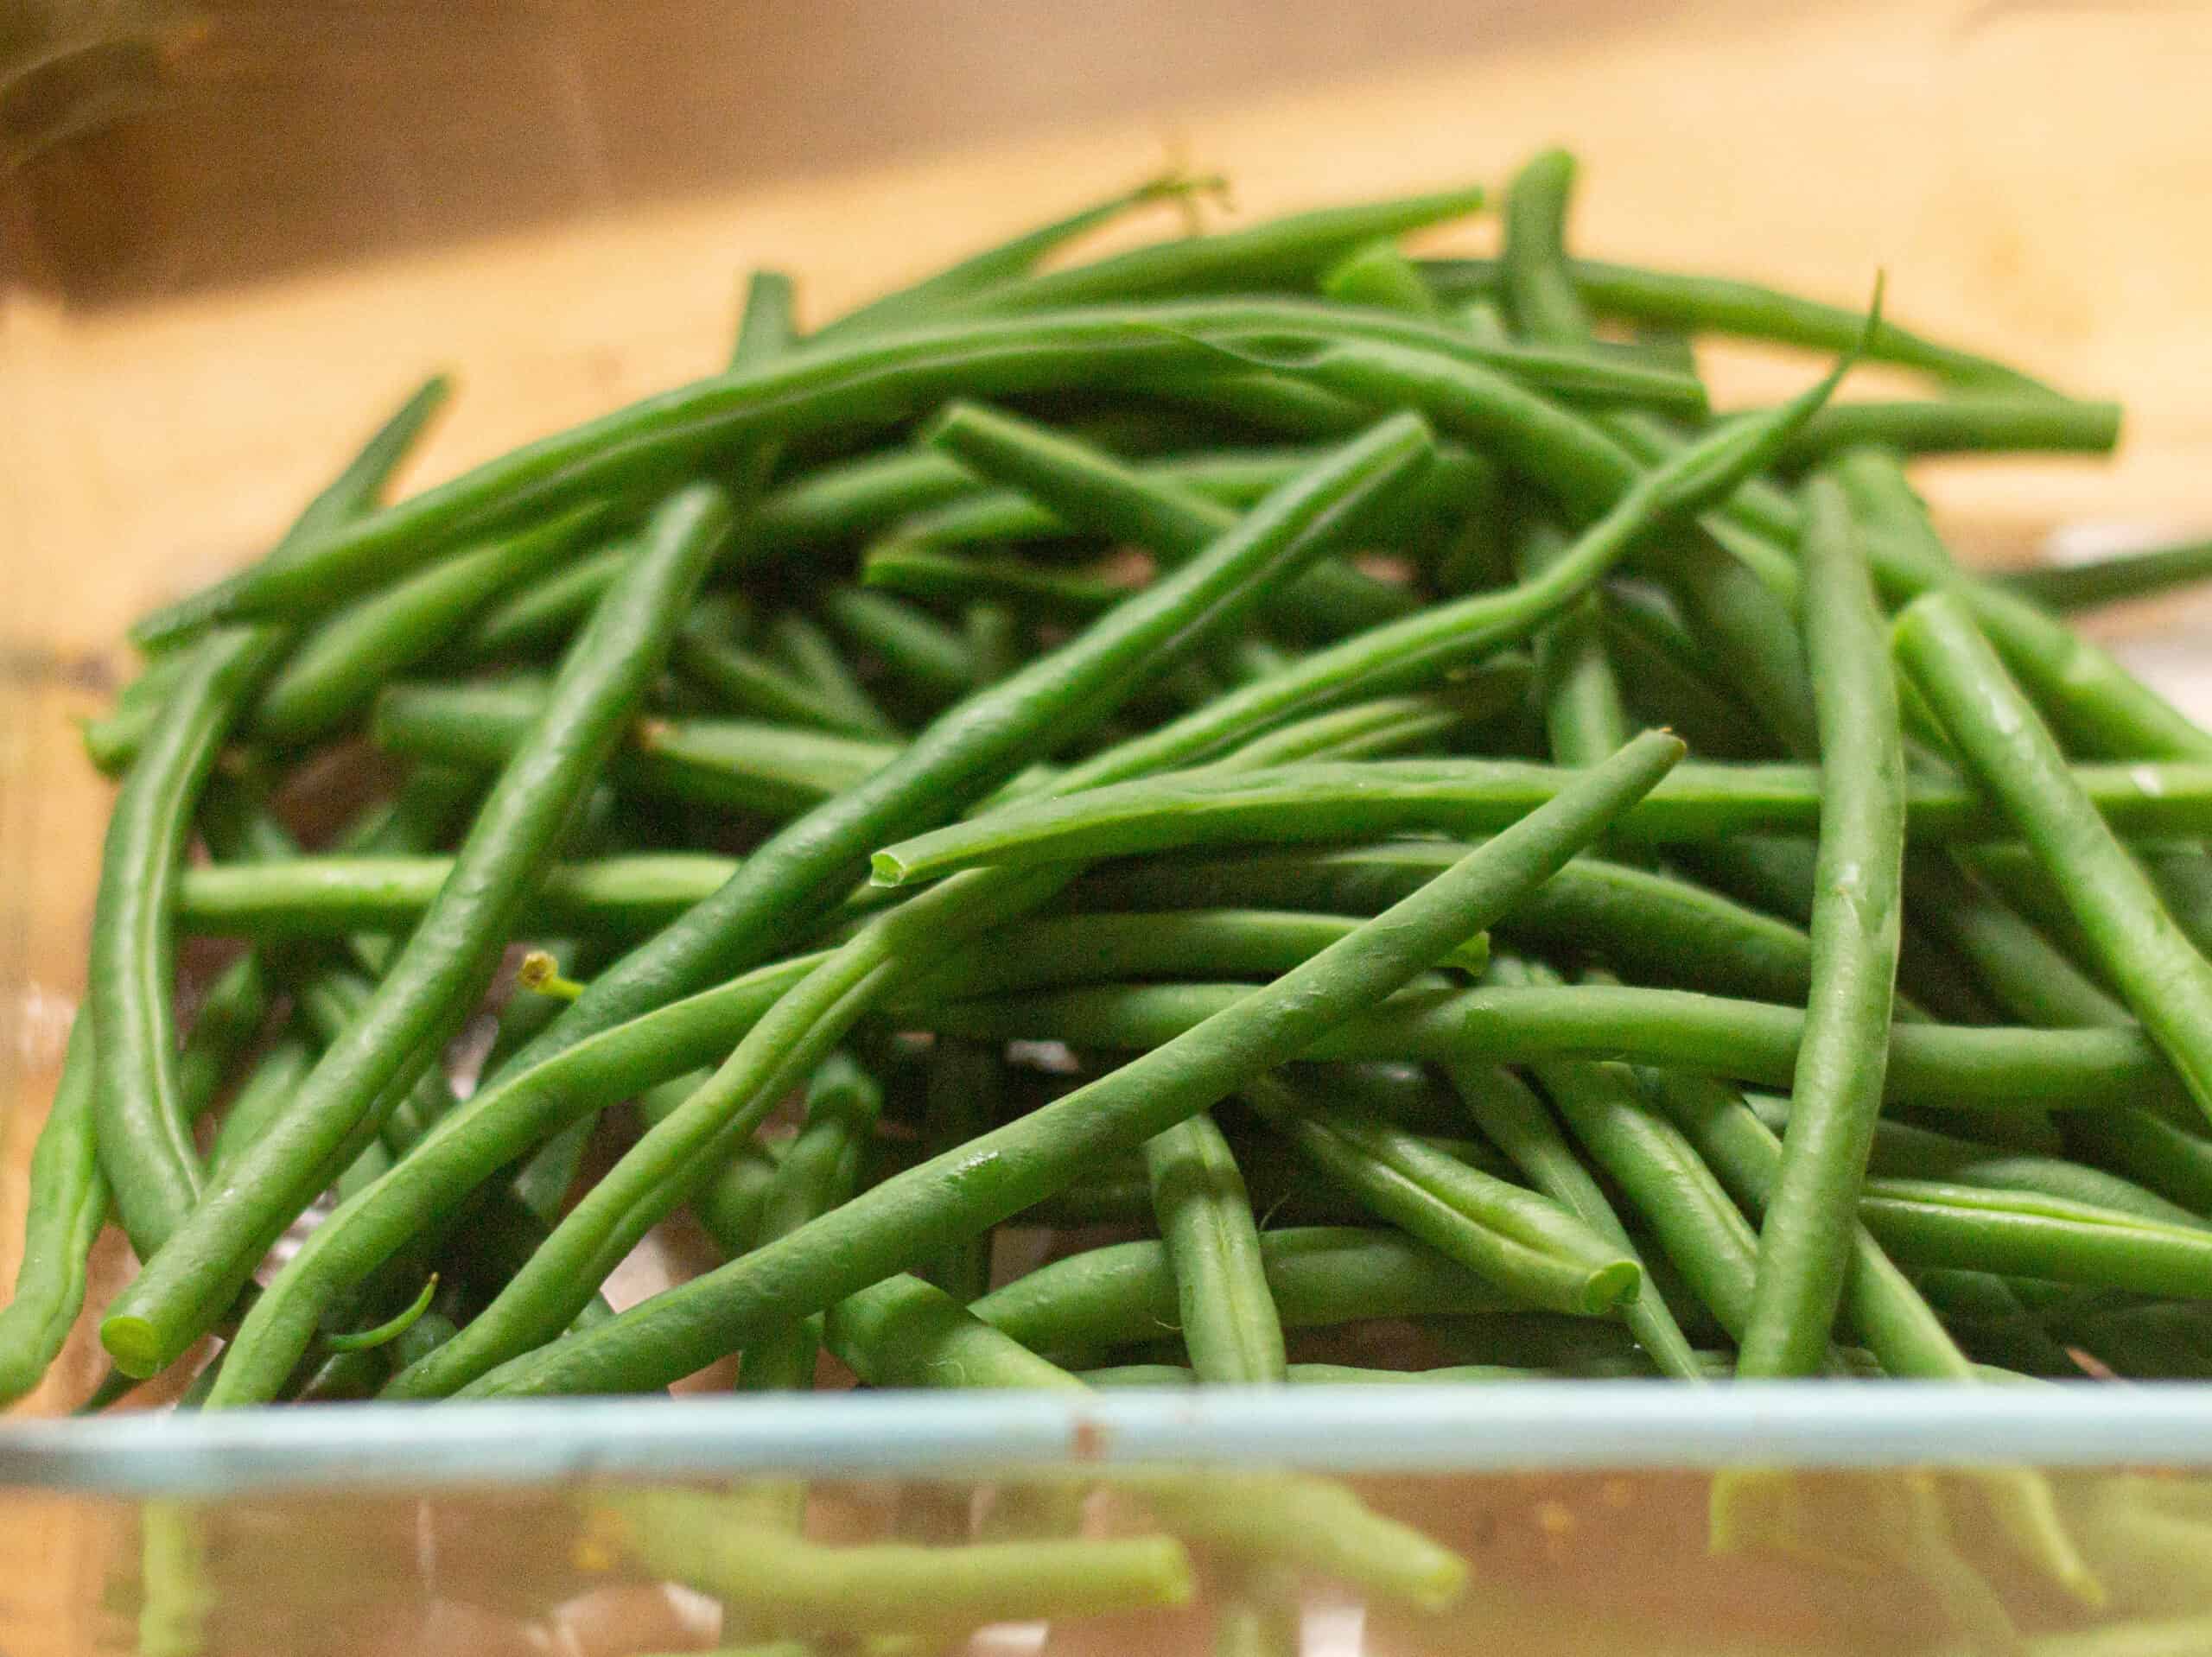 Par boiled green beans